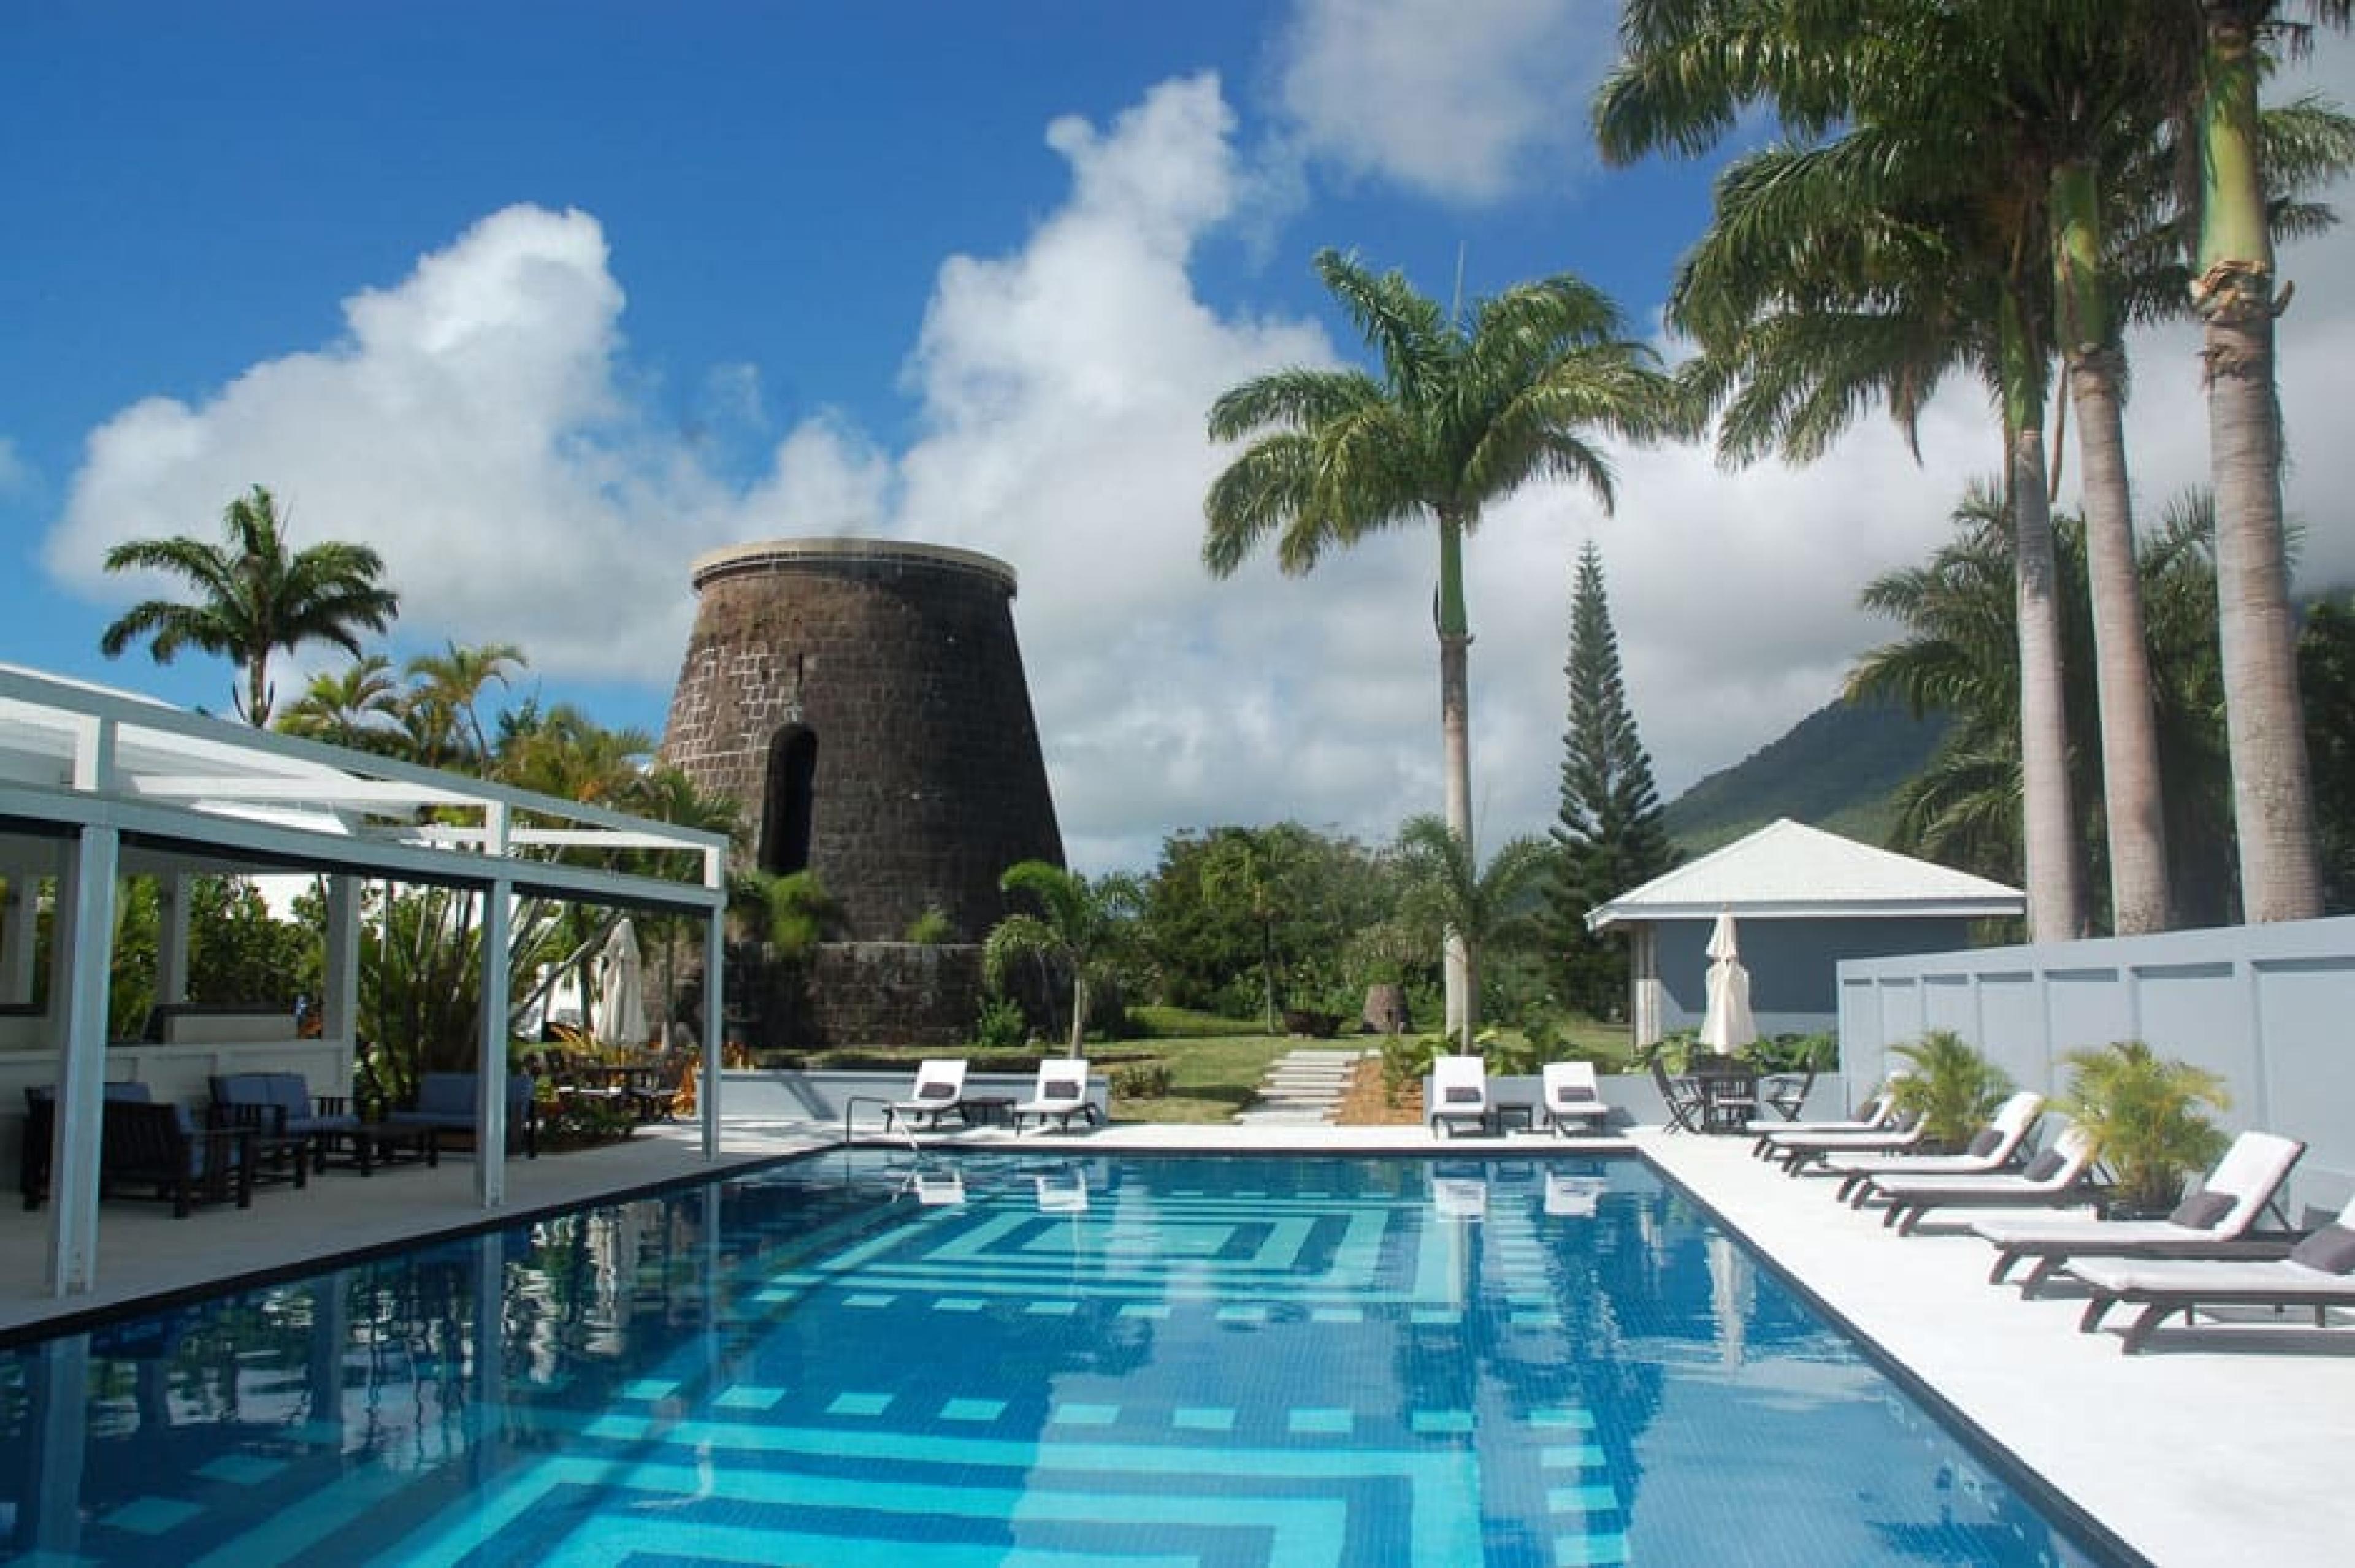 Pool Lounge at Montpelier Plantation Inn, Nevis, Caribbean